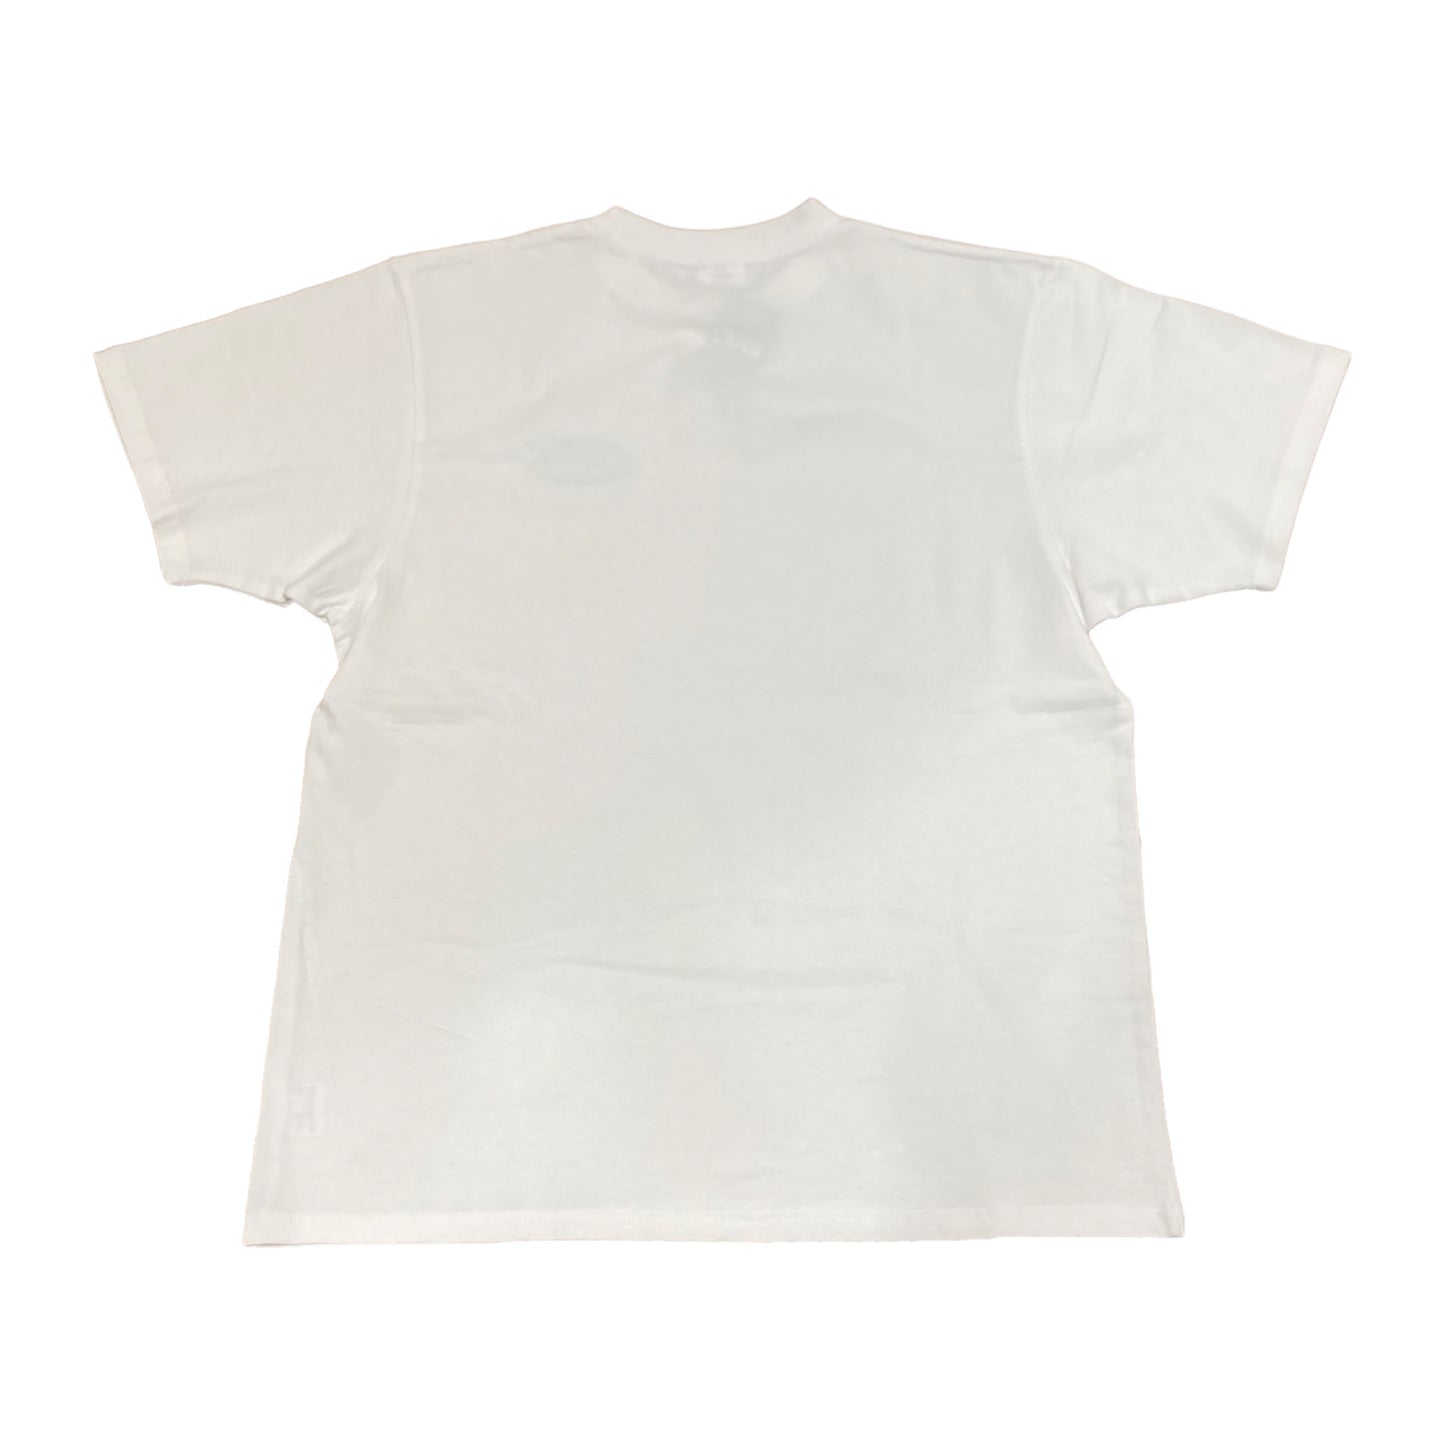 【UNION originals - ユニオンオリジナルス】Rover Logo T-shirt / White (Tシャツ/ホワイト)